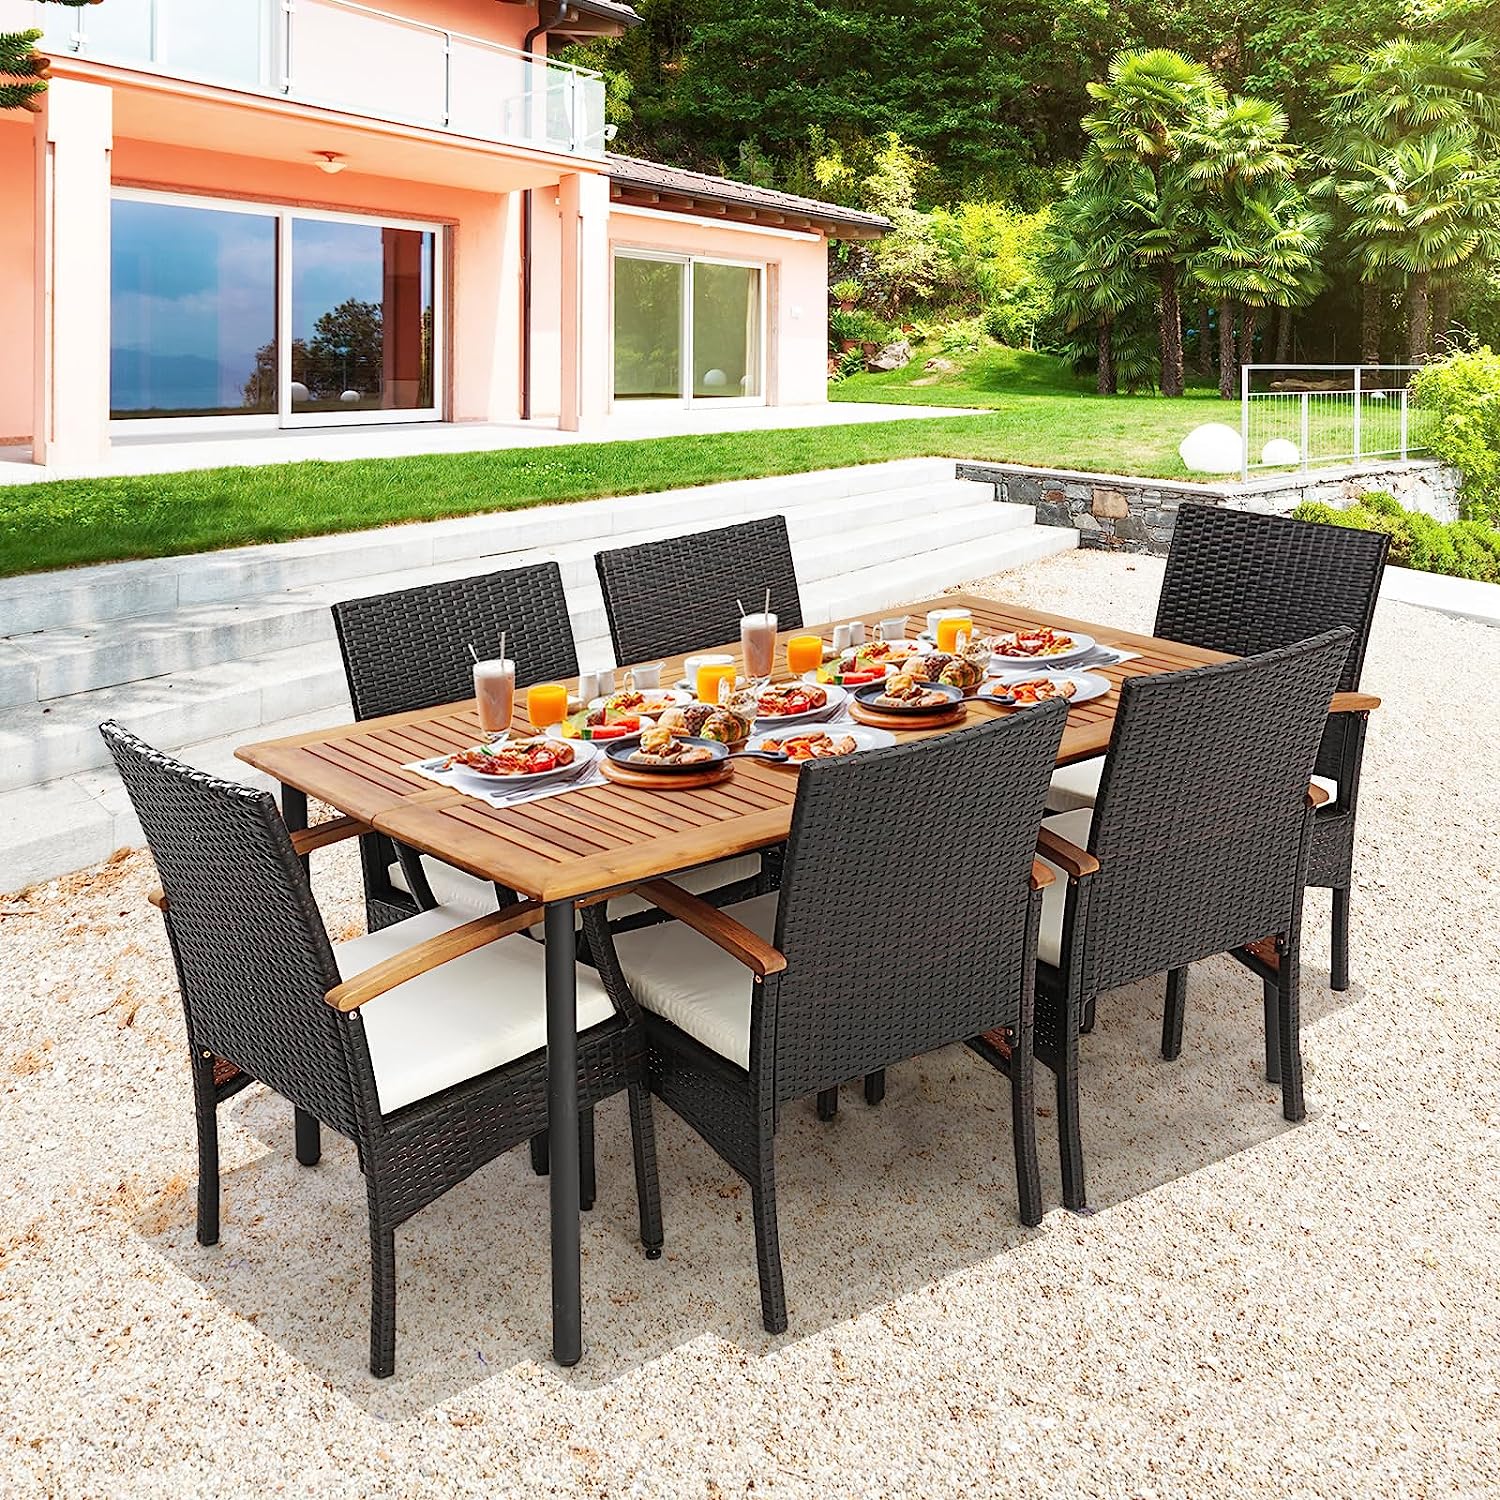 7 Pieces Patio Rattan Dining Table Sets Outdoor Conversation Bar Set